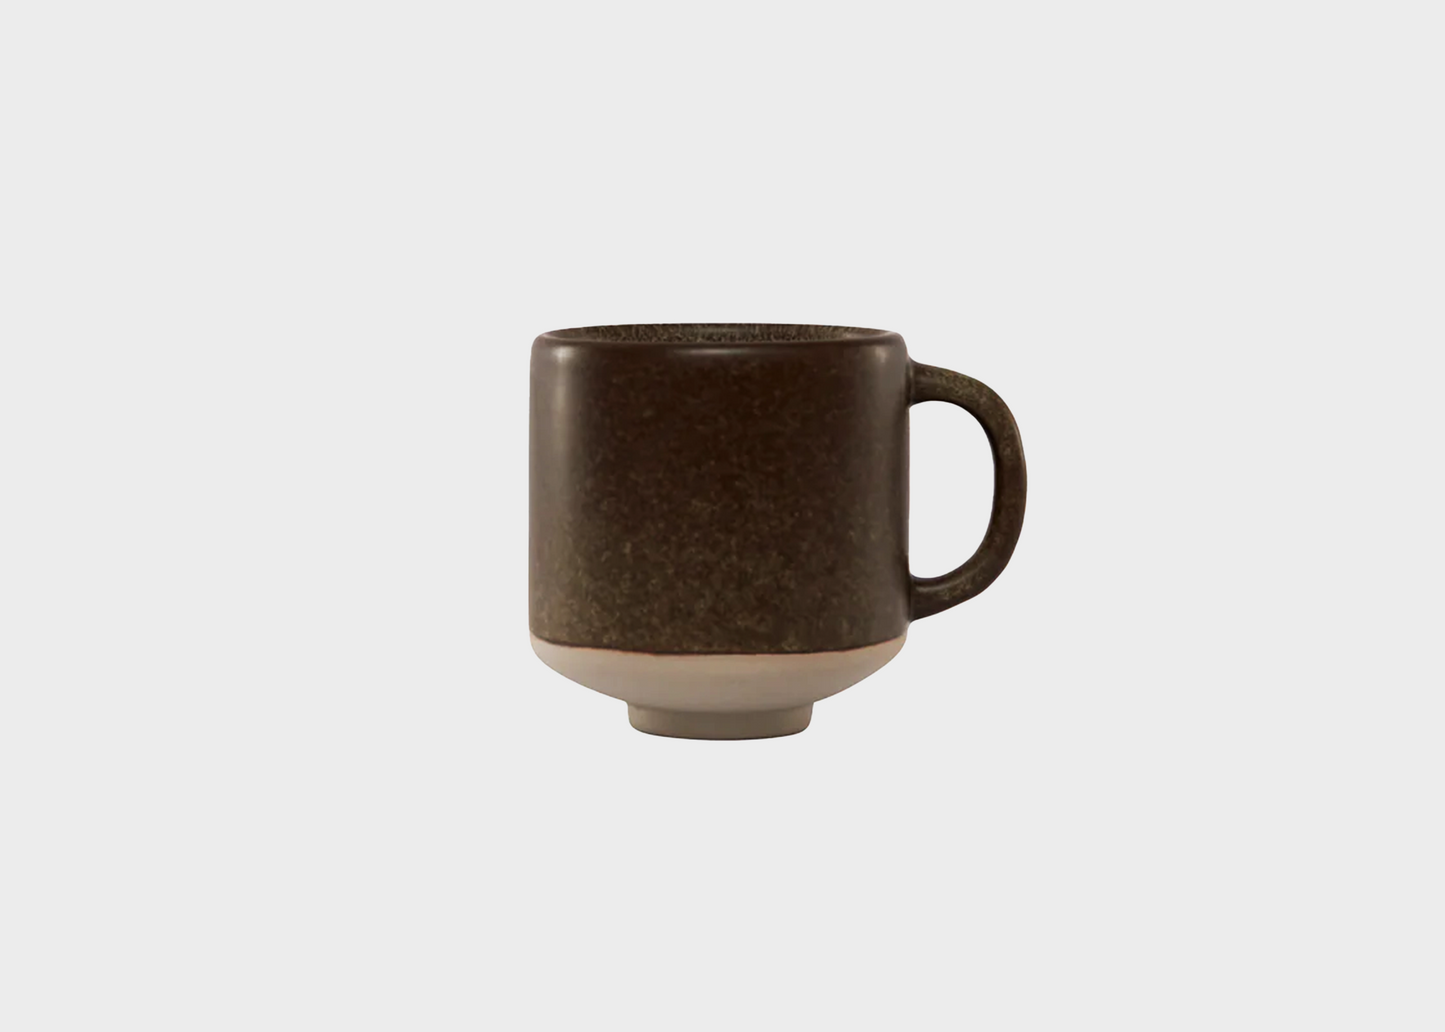 Brown Hagi cup mug made of ceramic by OyOy sold at Woodland Mod